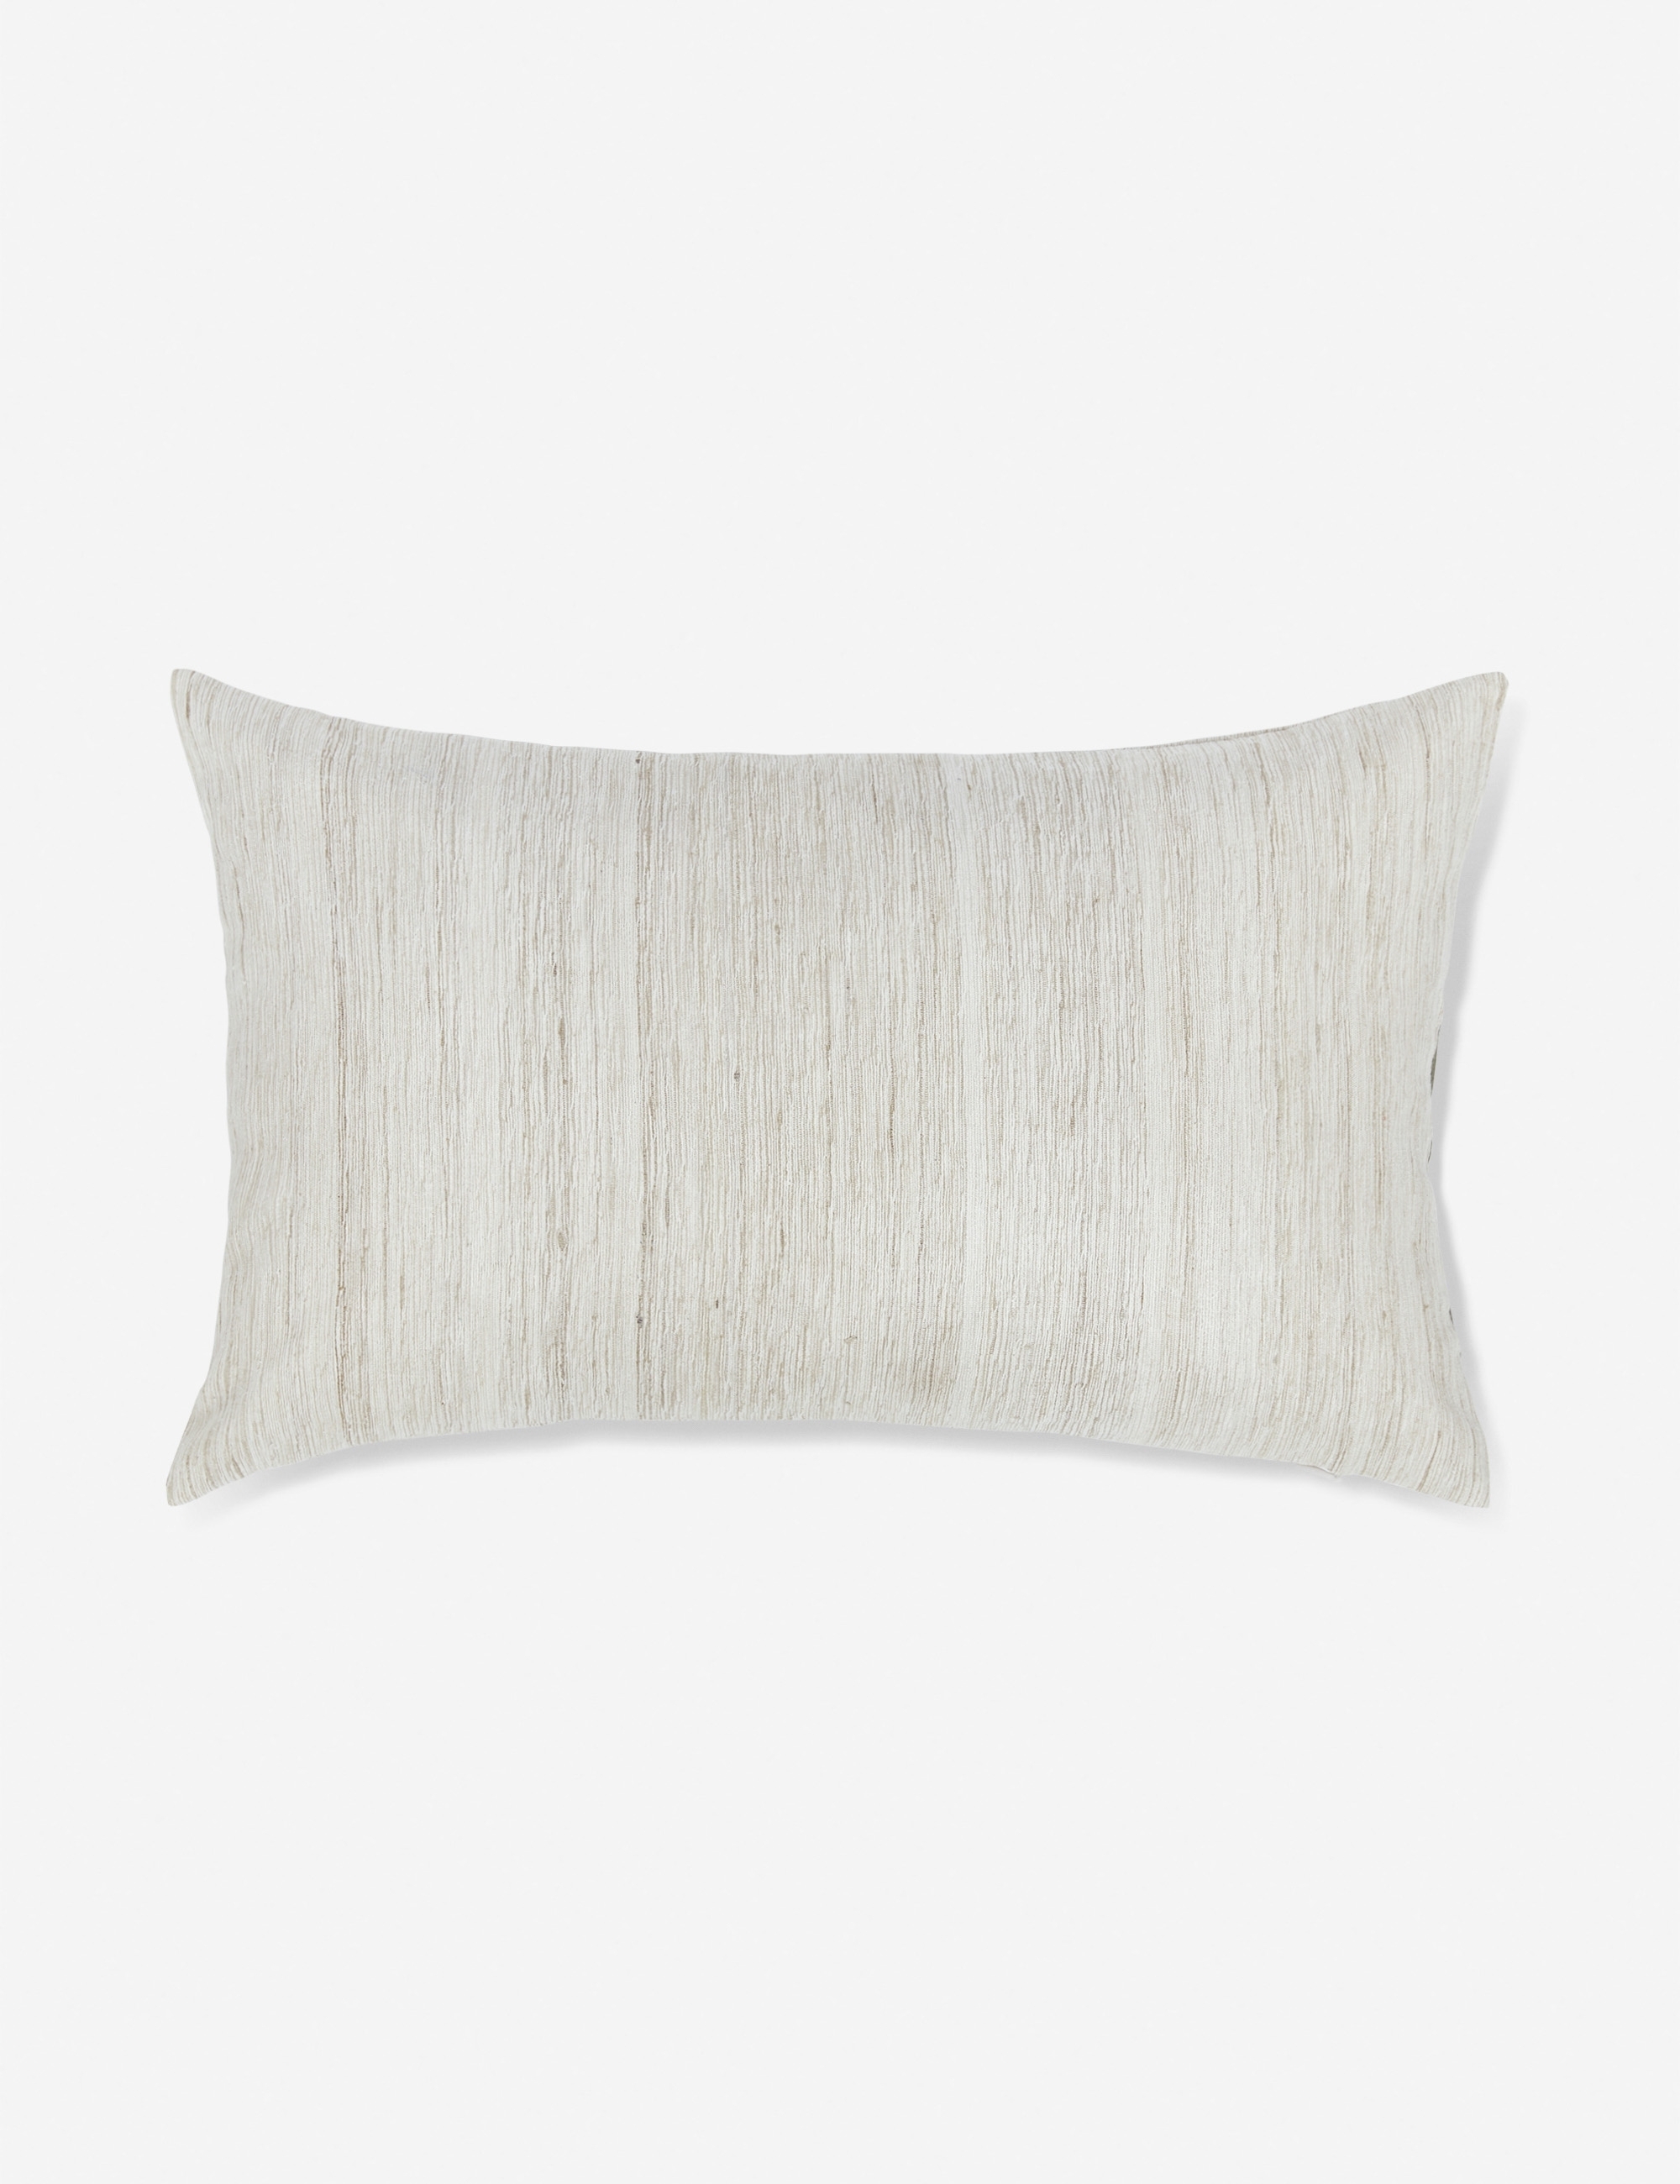 Stonewalk Lumbar Pillow By Élan Byrd, 20" x 12" - Image 2